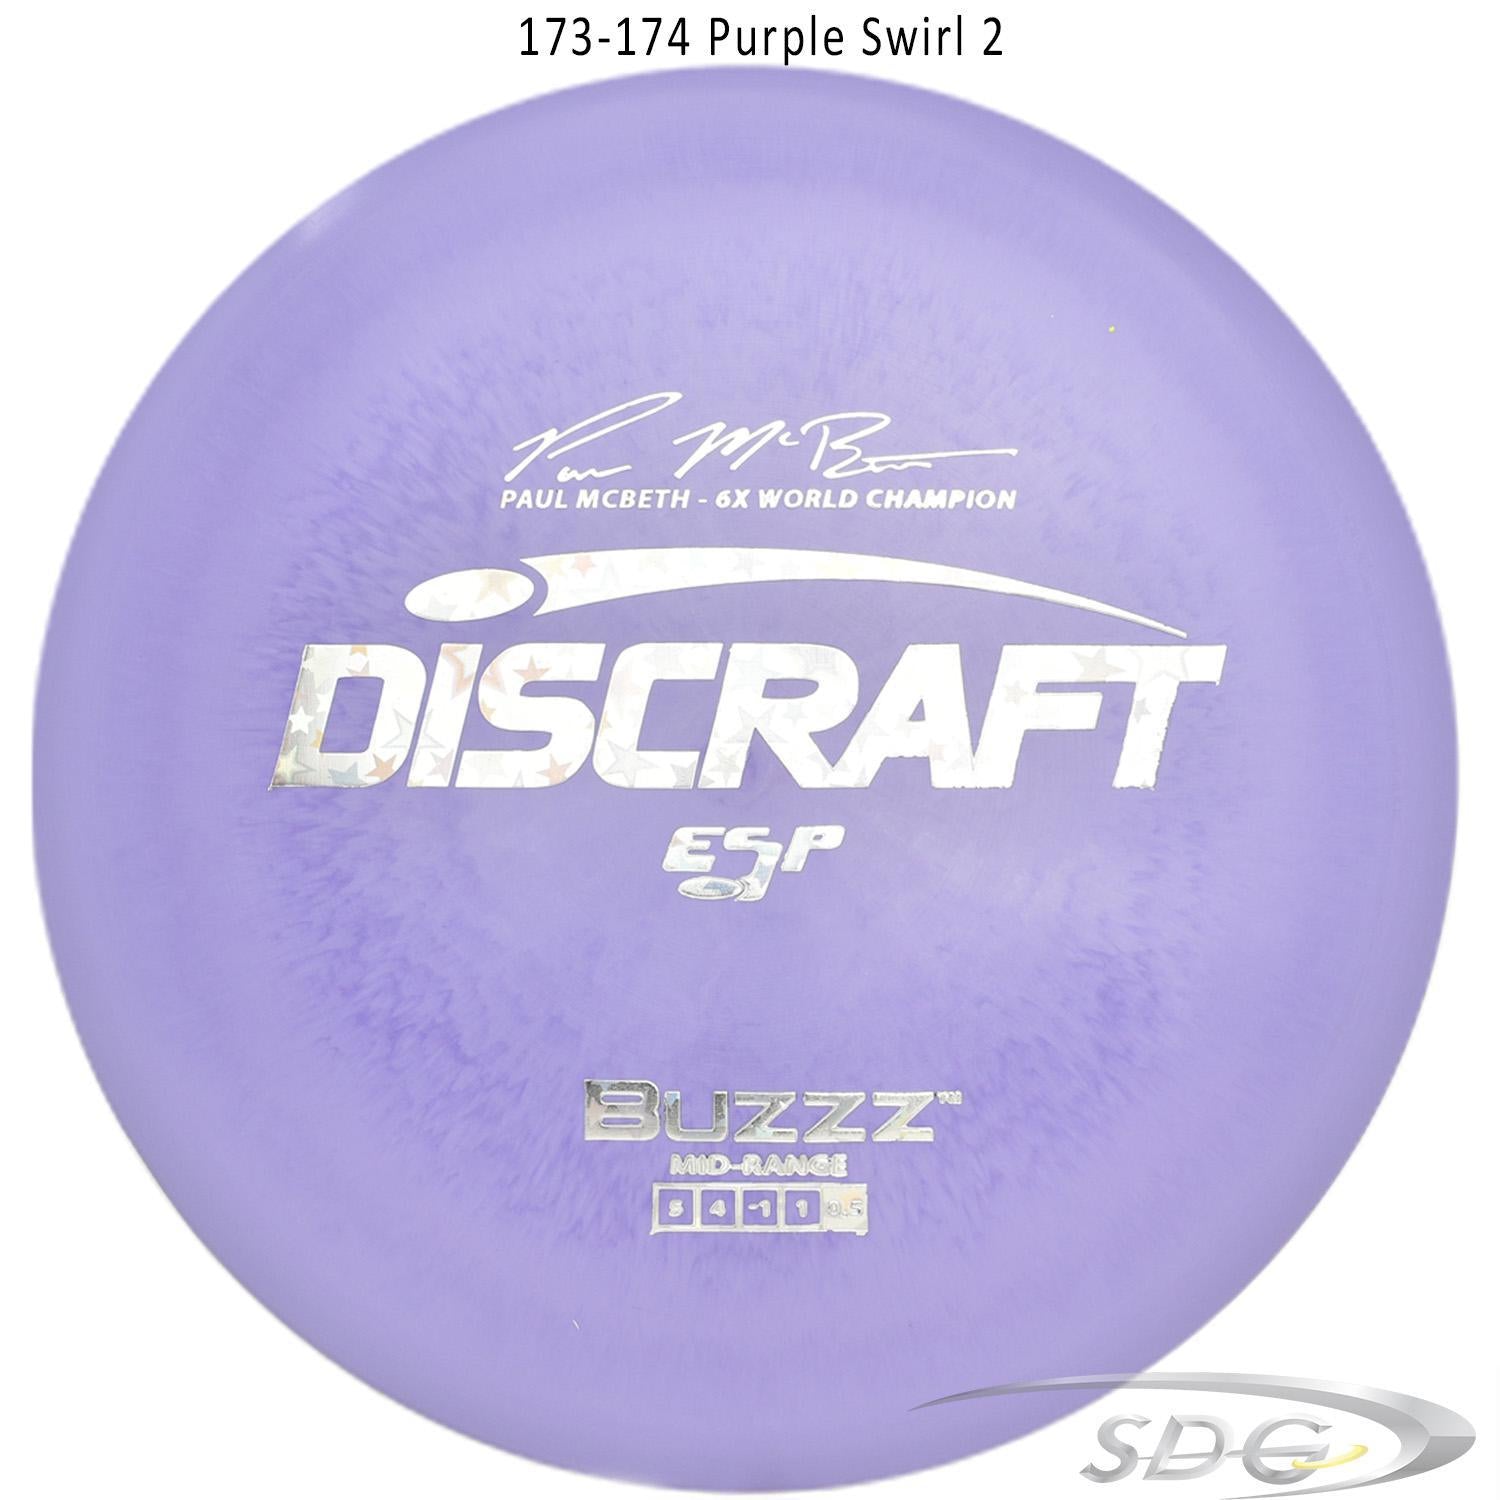 discraft-esp-buzzz-6x-paul-mcbeth-signature-series-disc-golf-mid-range-176-173-weights 173-174 Purple Swirl 2 